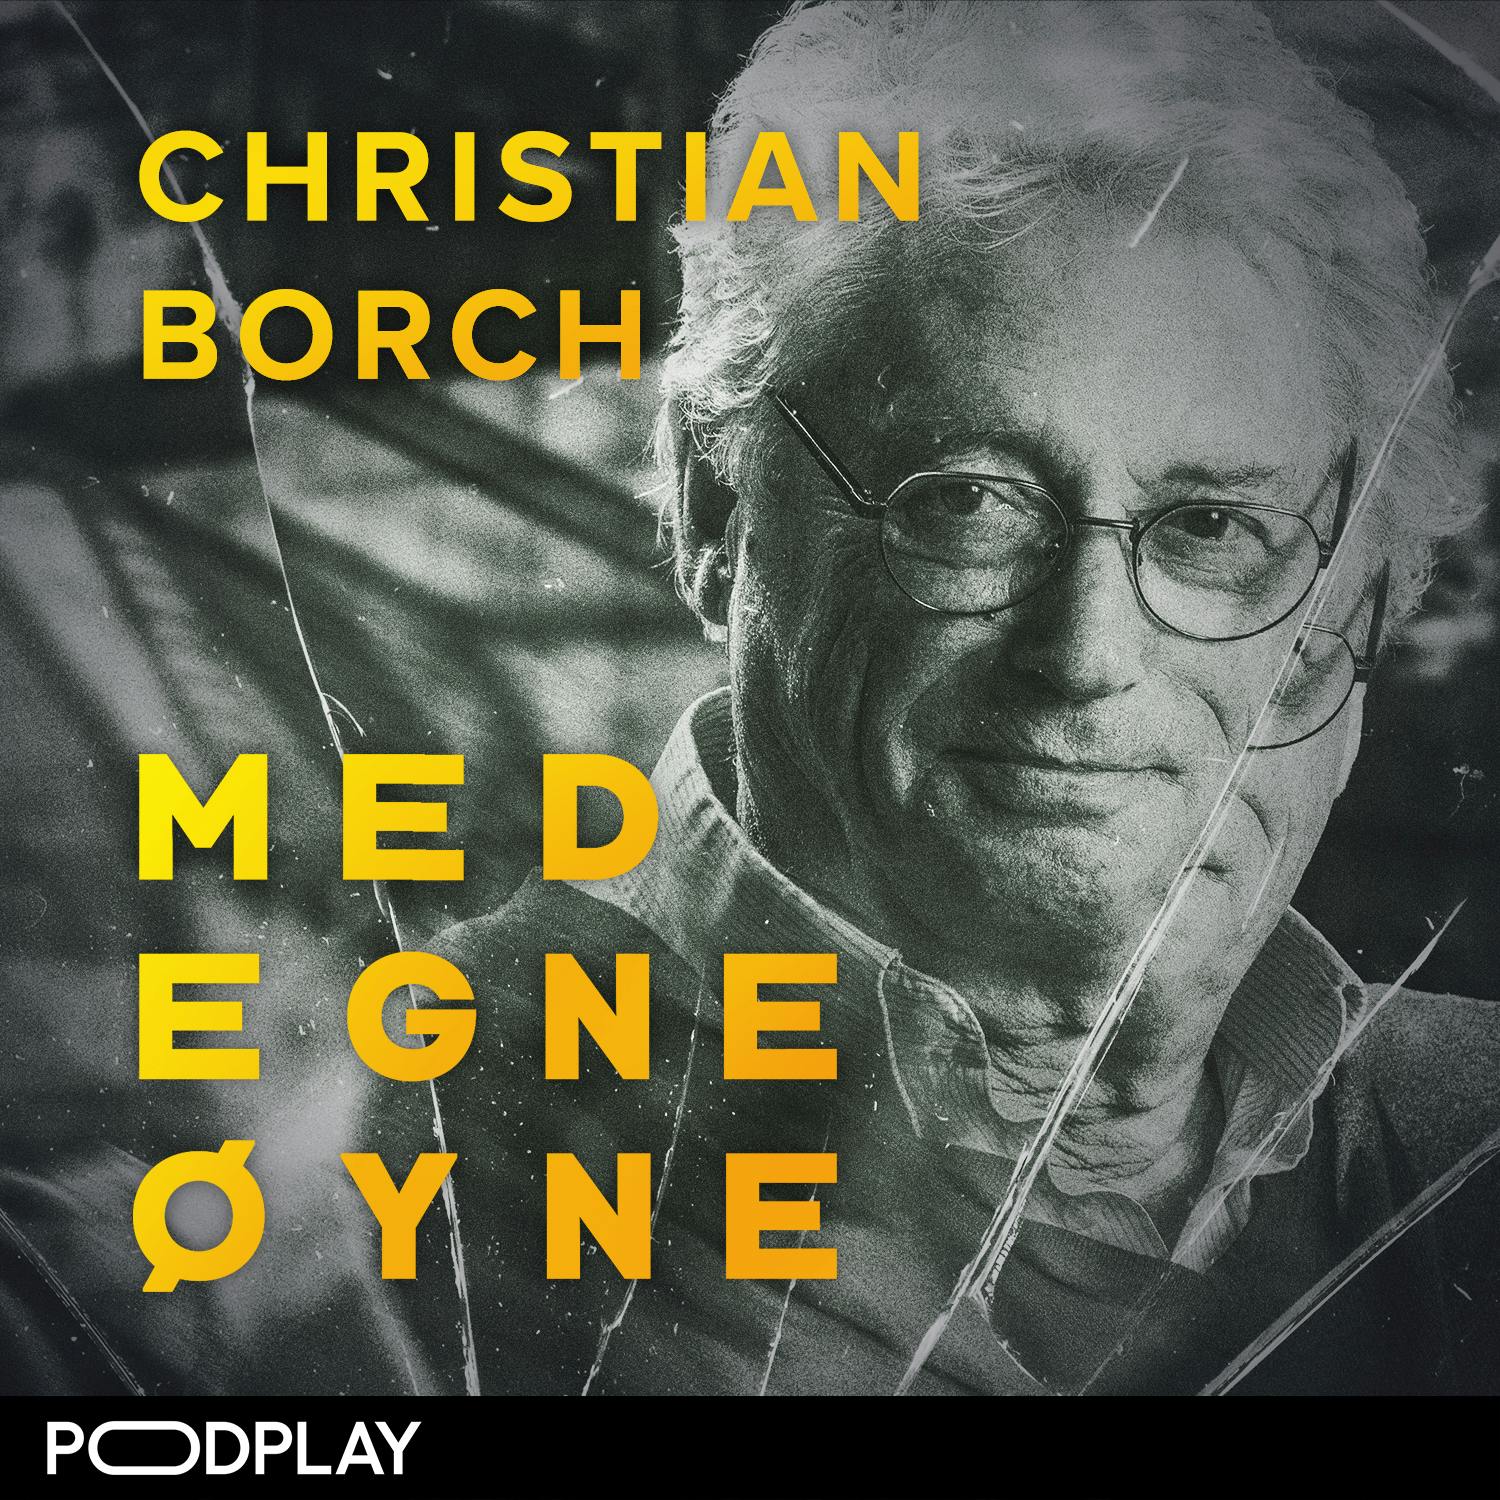 Christian Borch – Dead man walking